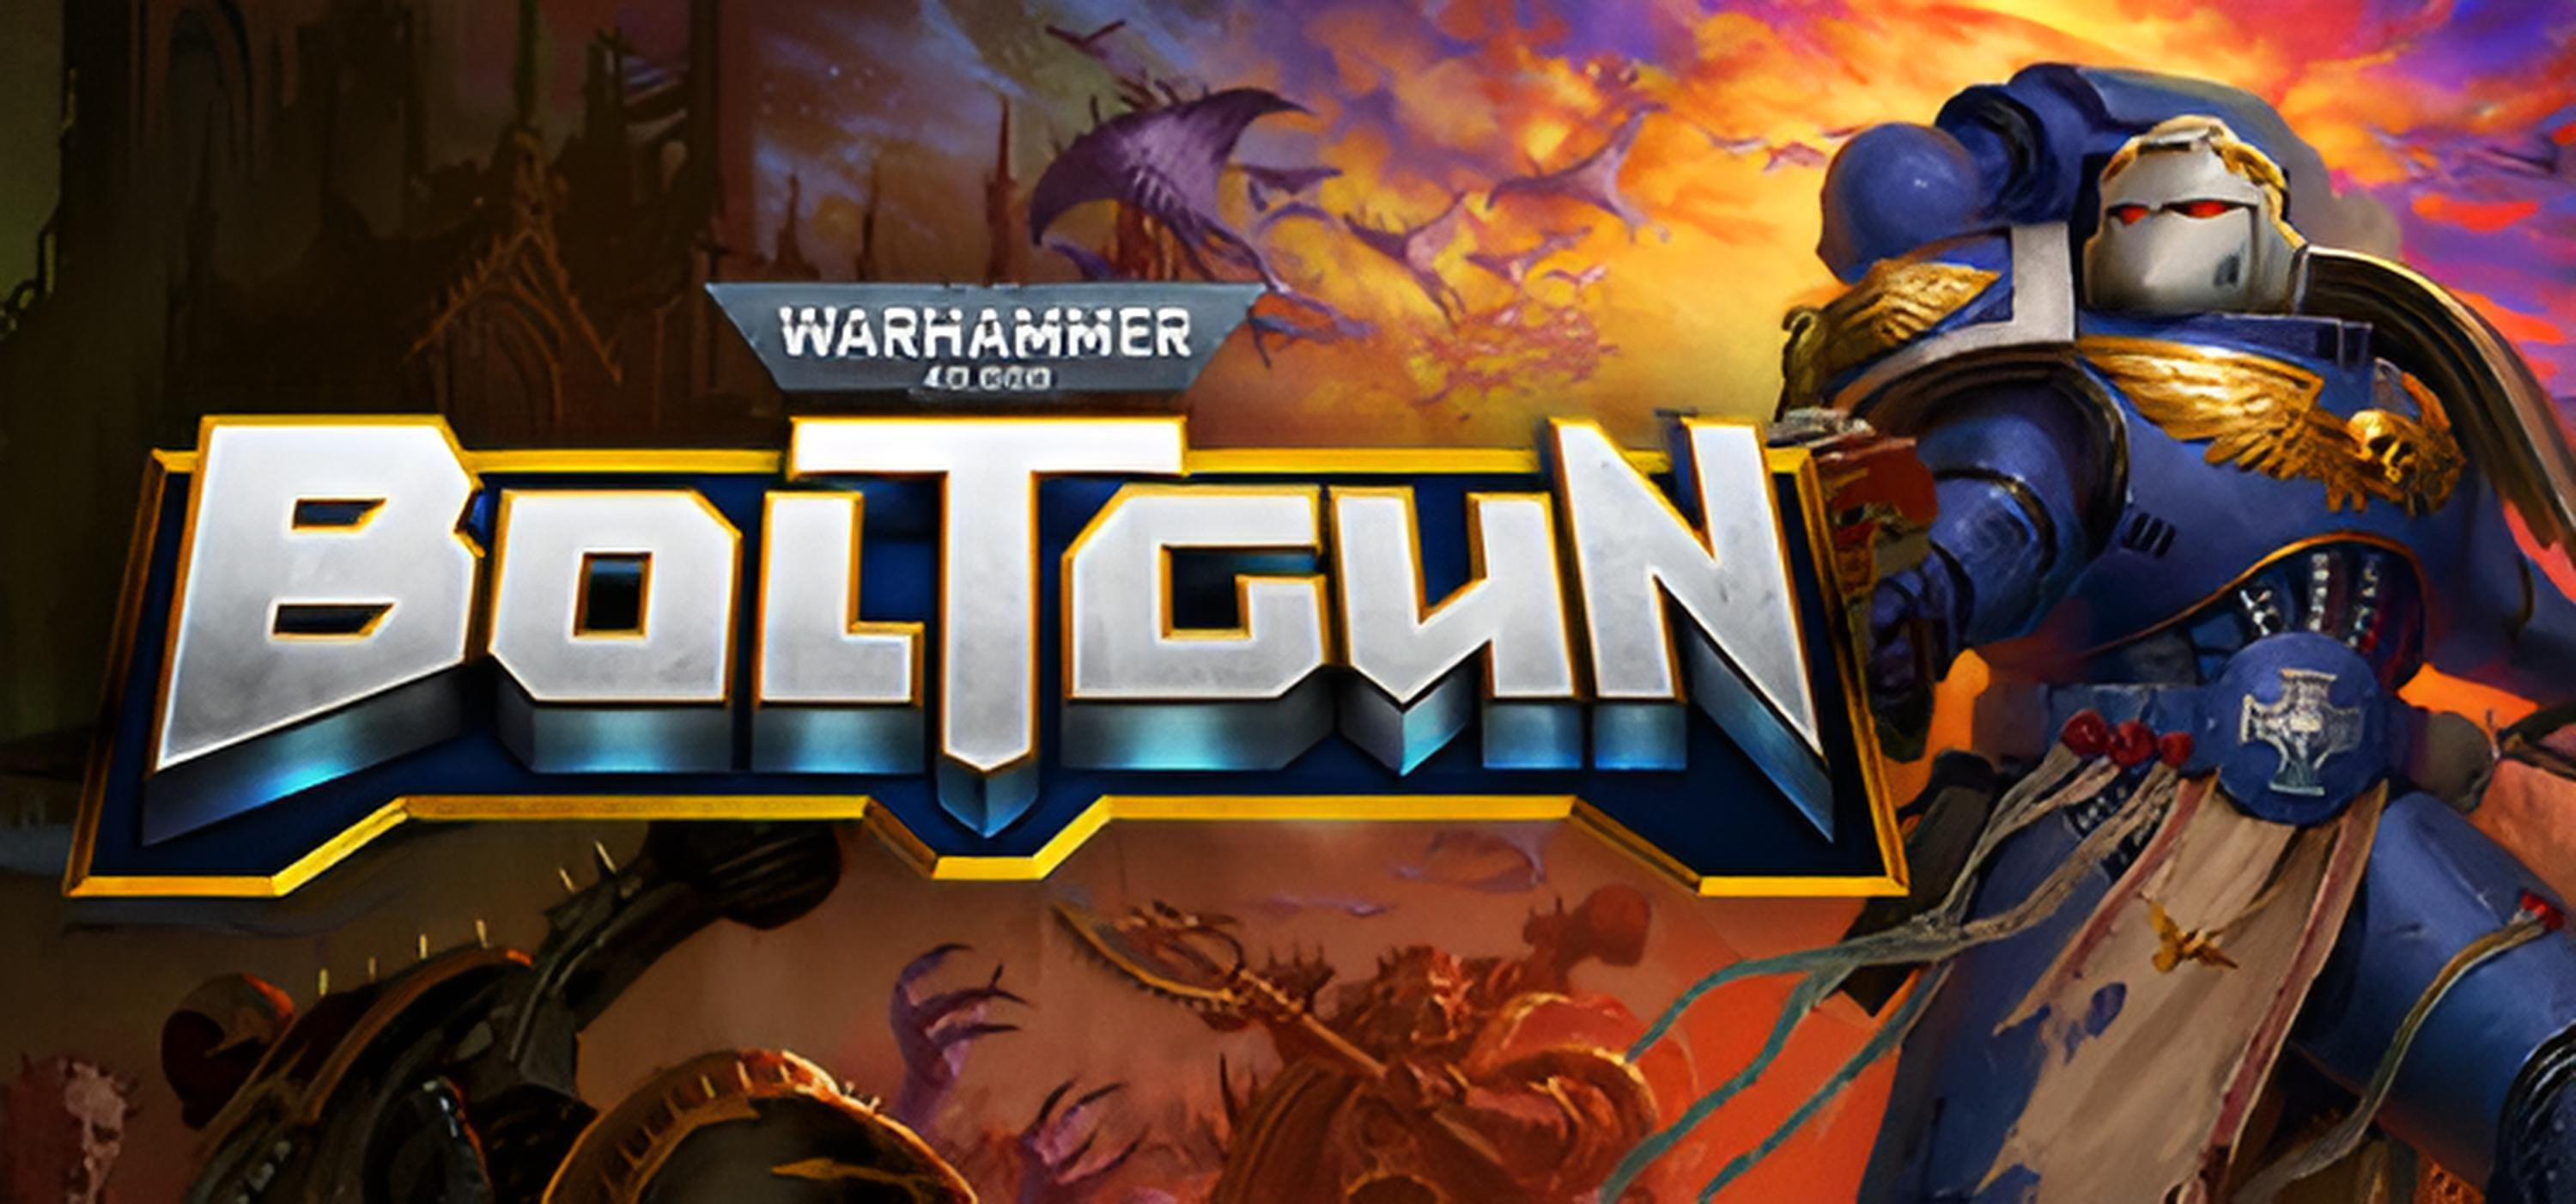 Обложка игры Warhammer 40,000: Boltgun